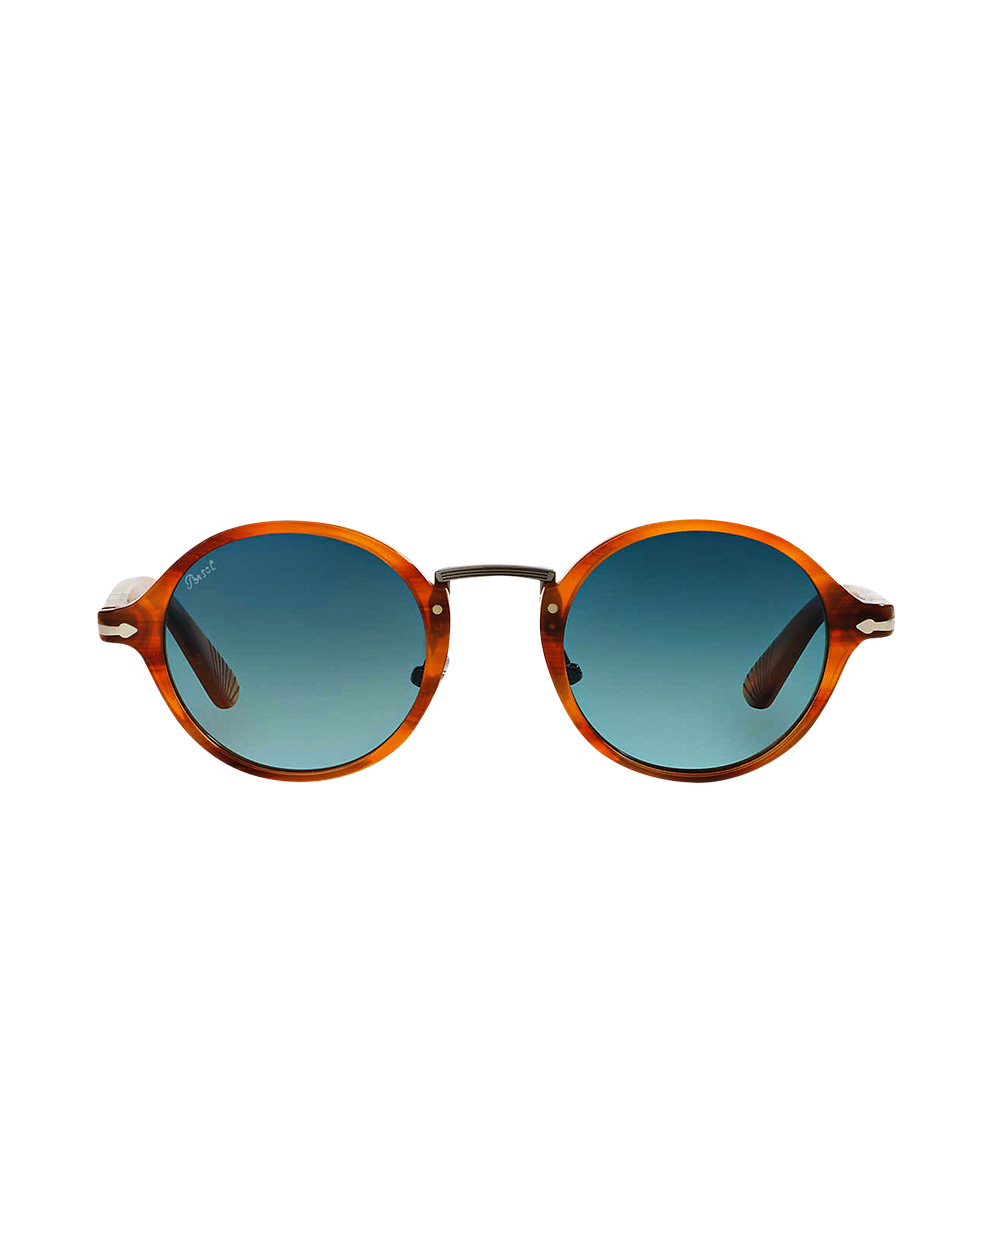 Persol sunglasses, $480, from Sunglass Hut